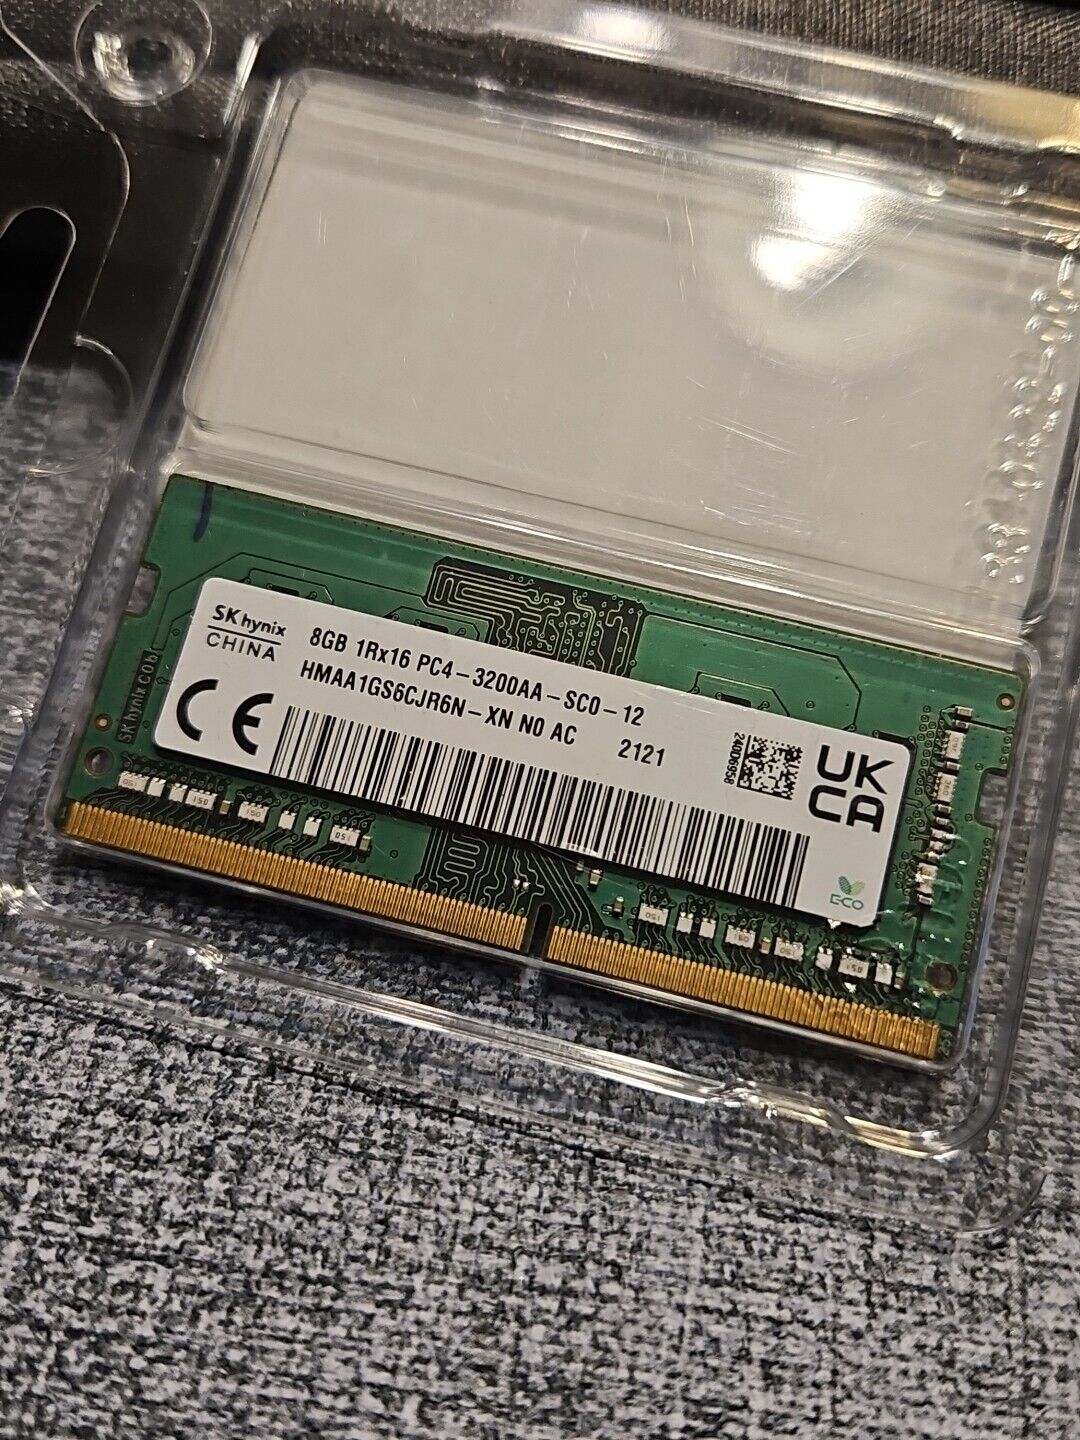 OEM SK Hynix (8GB) DDR4 1Rx16 (PC4-3200AA) (HMAA1GS6CJR6N-XN NO AC) SODIMM 